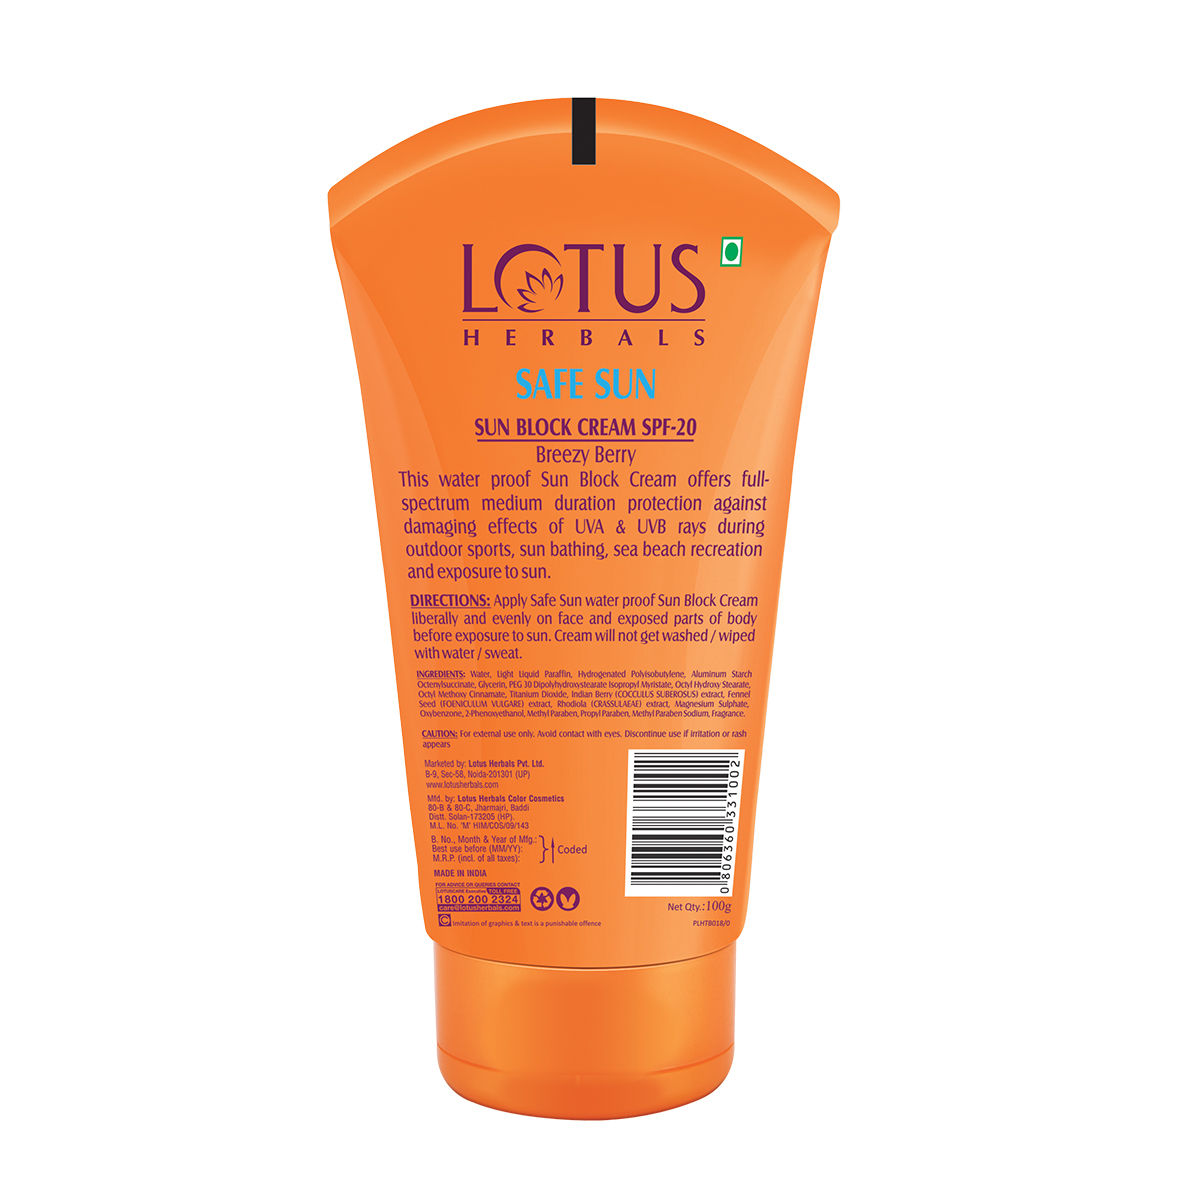 Lotus Herbals Safe Sun Sun Block Cream SPF 20 PA+ UVA & UVB, 100 gm, Pack of 1 